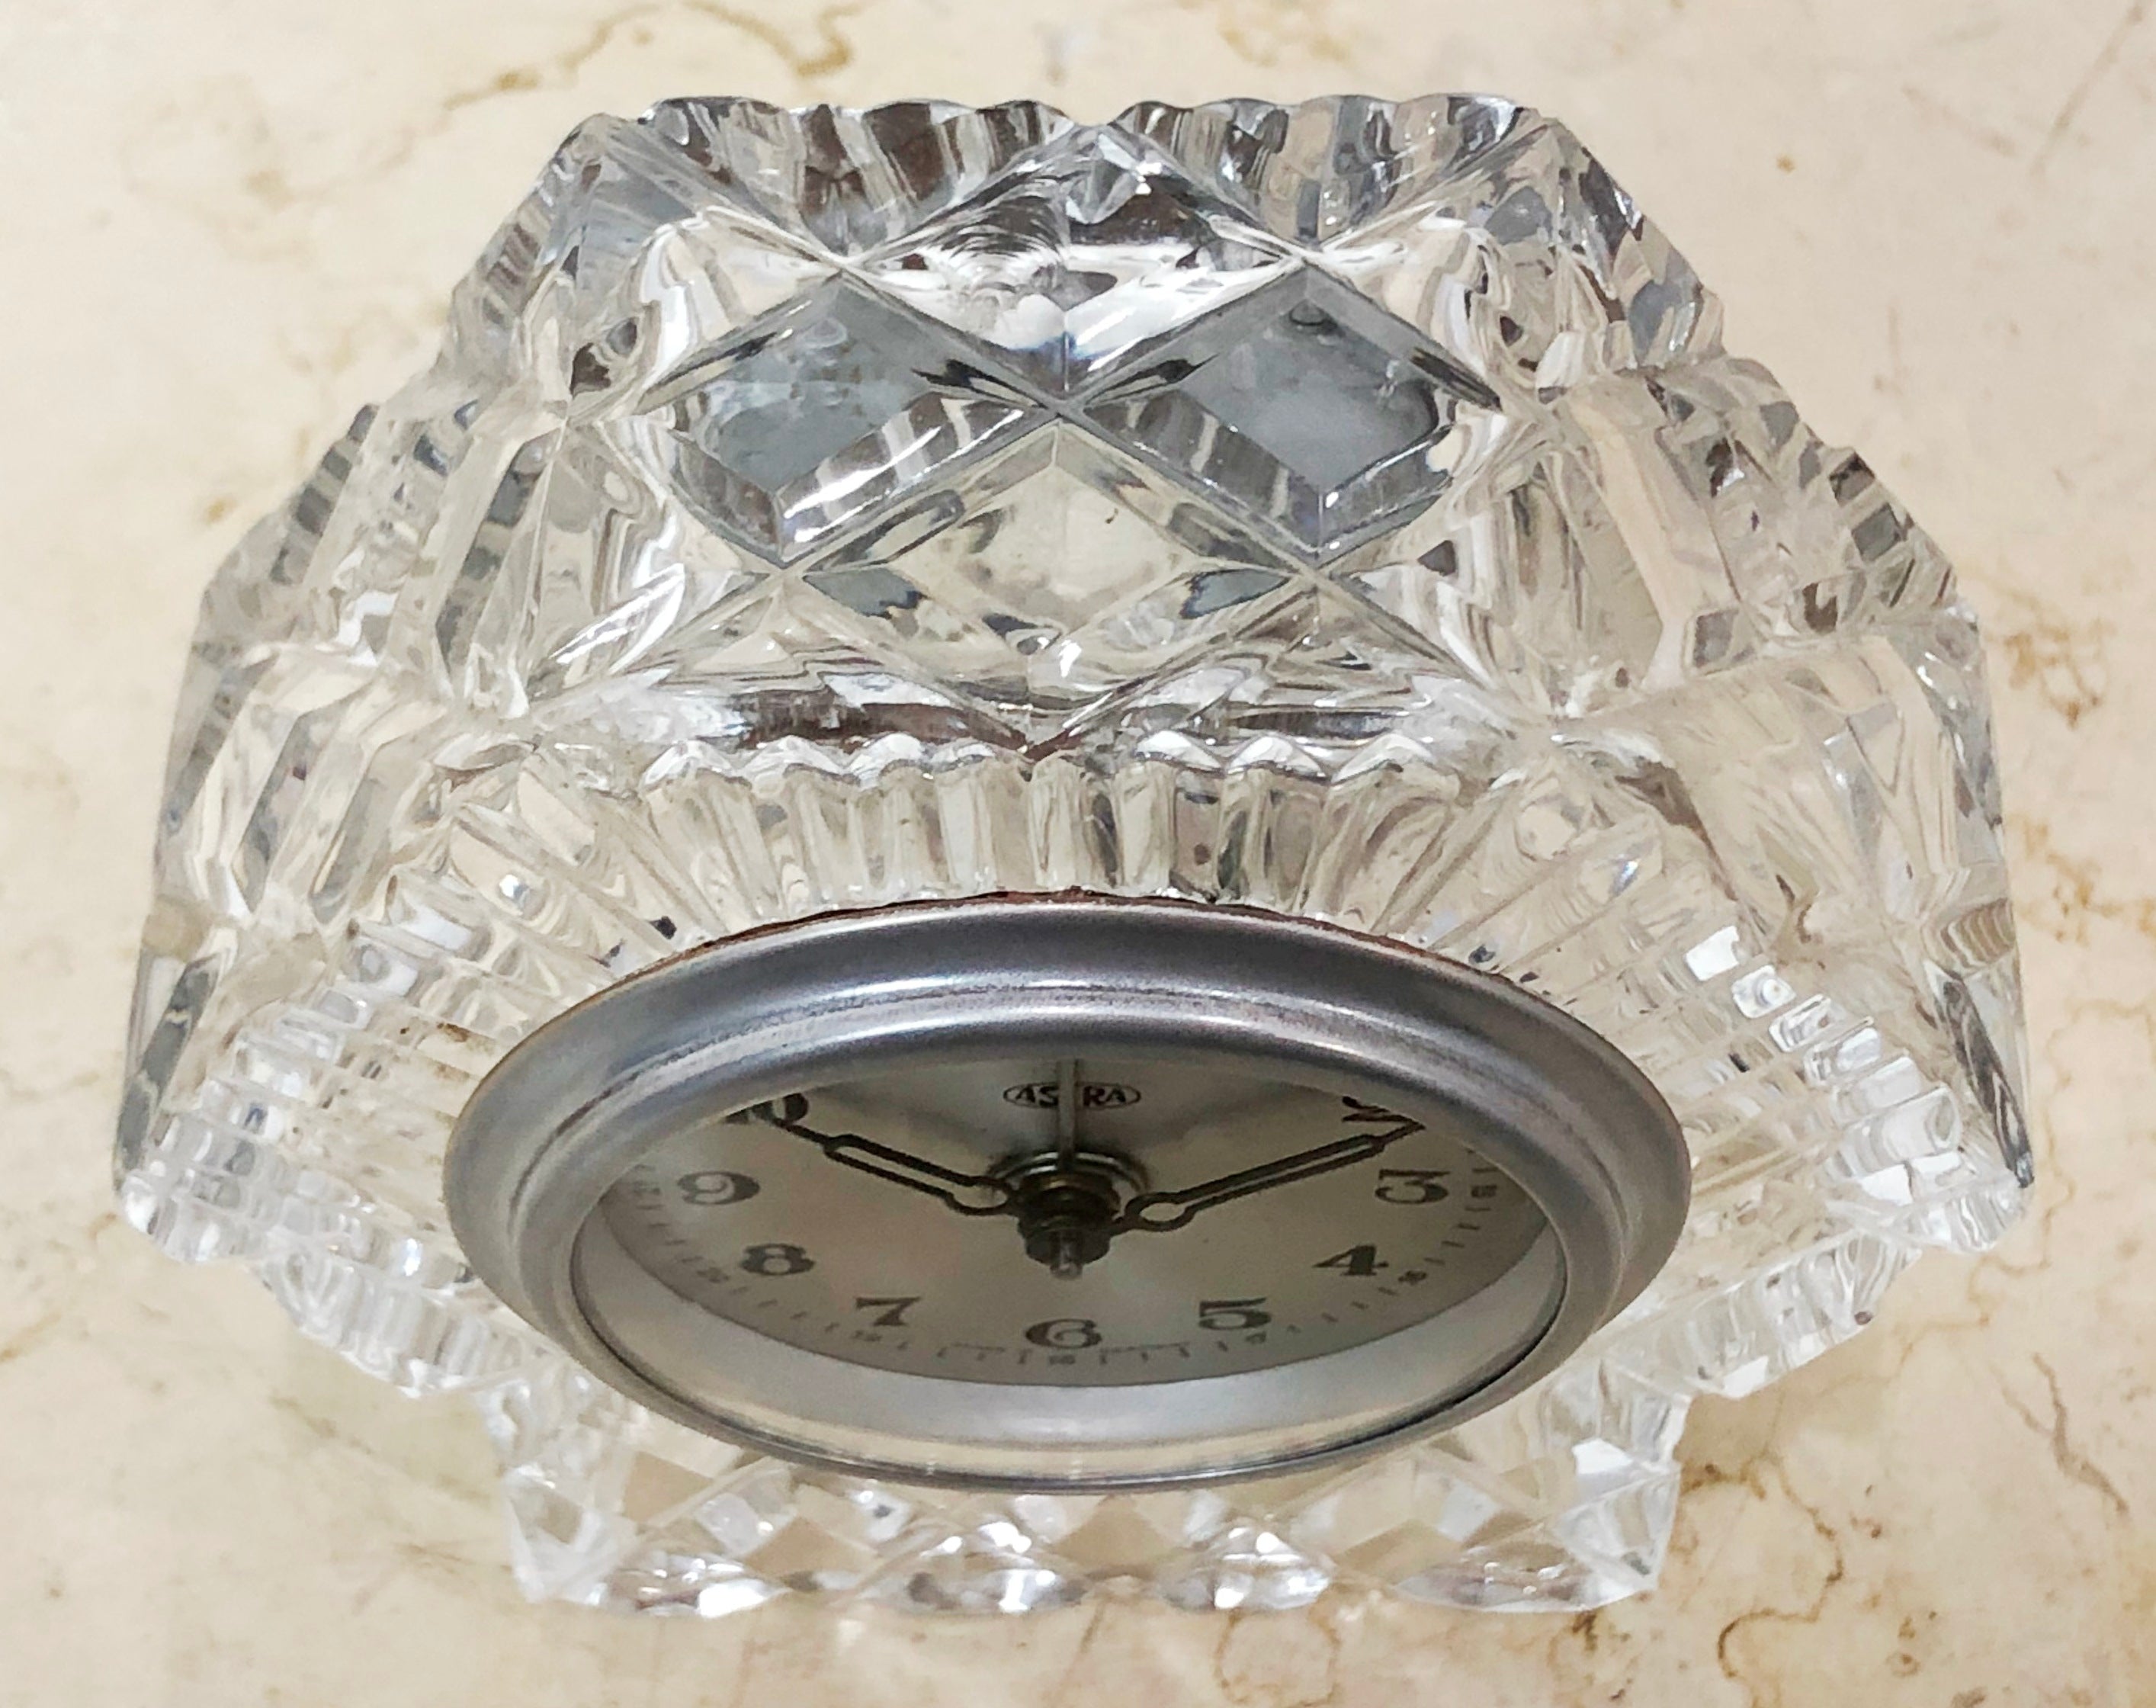 Vintage ASTRA French Crystal Desk Alarm Clock | eXibit collection